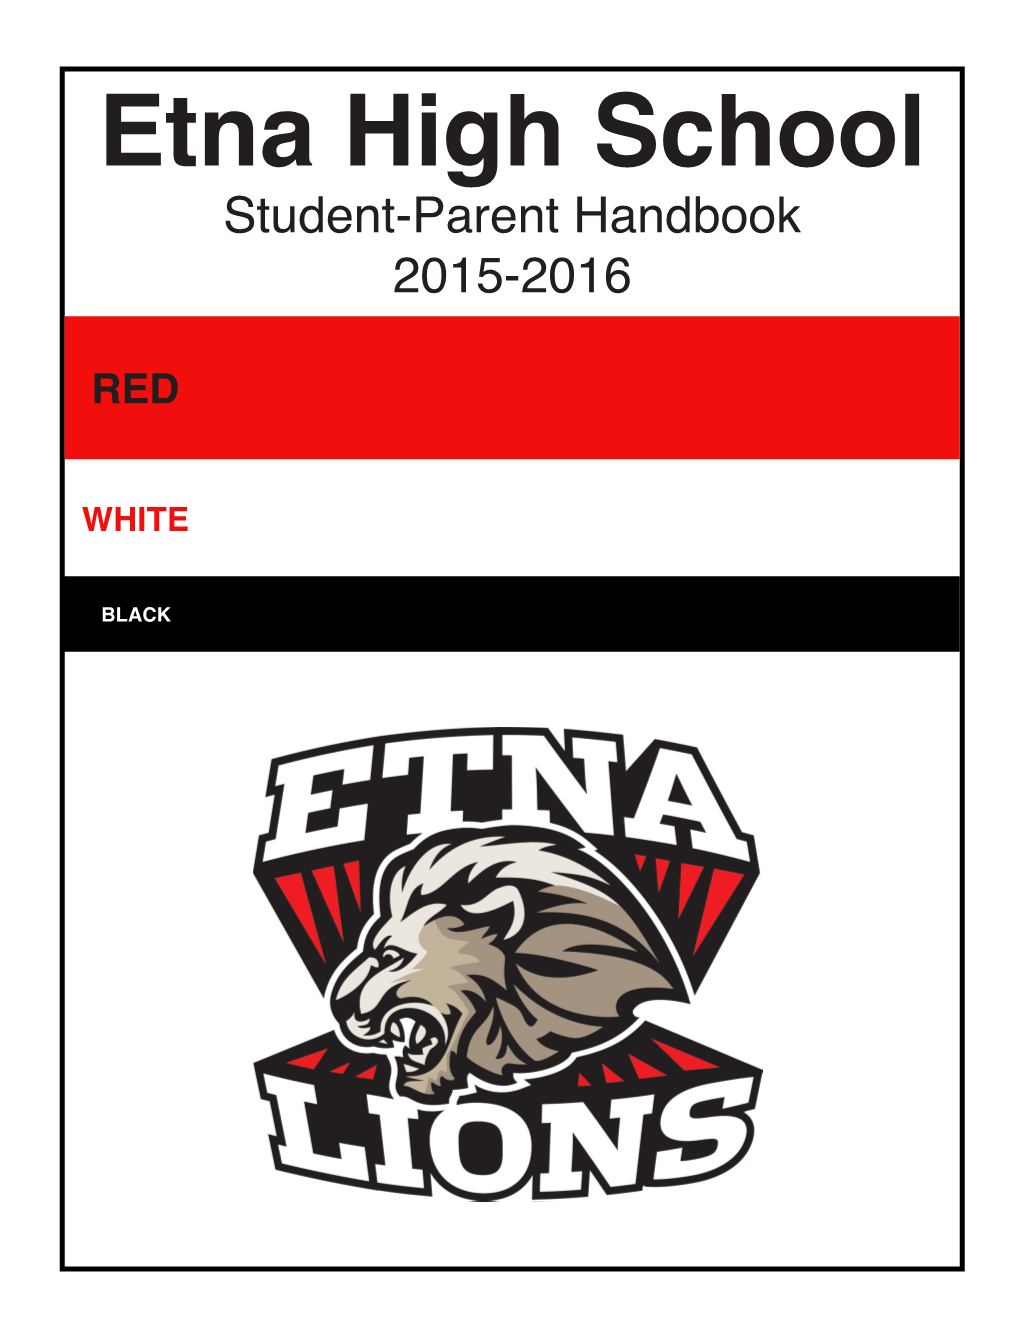 Etna High School Student-Parent Handbook 2015-2016